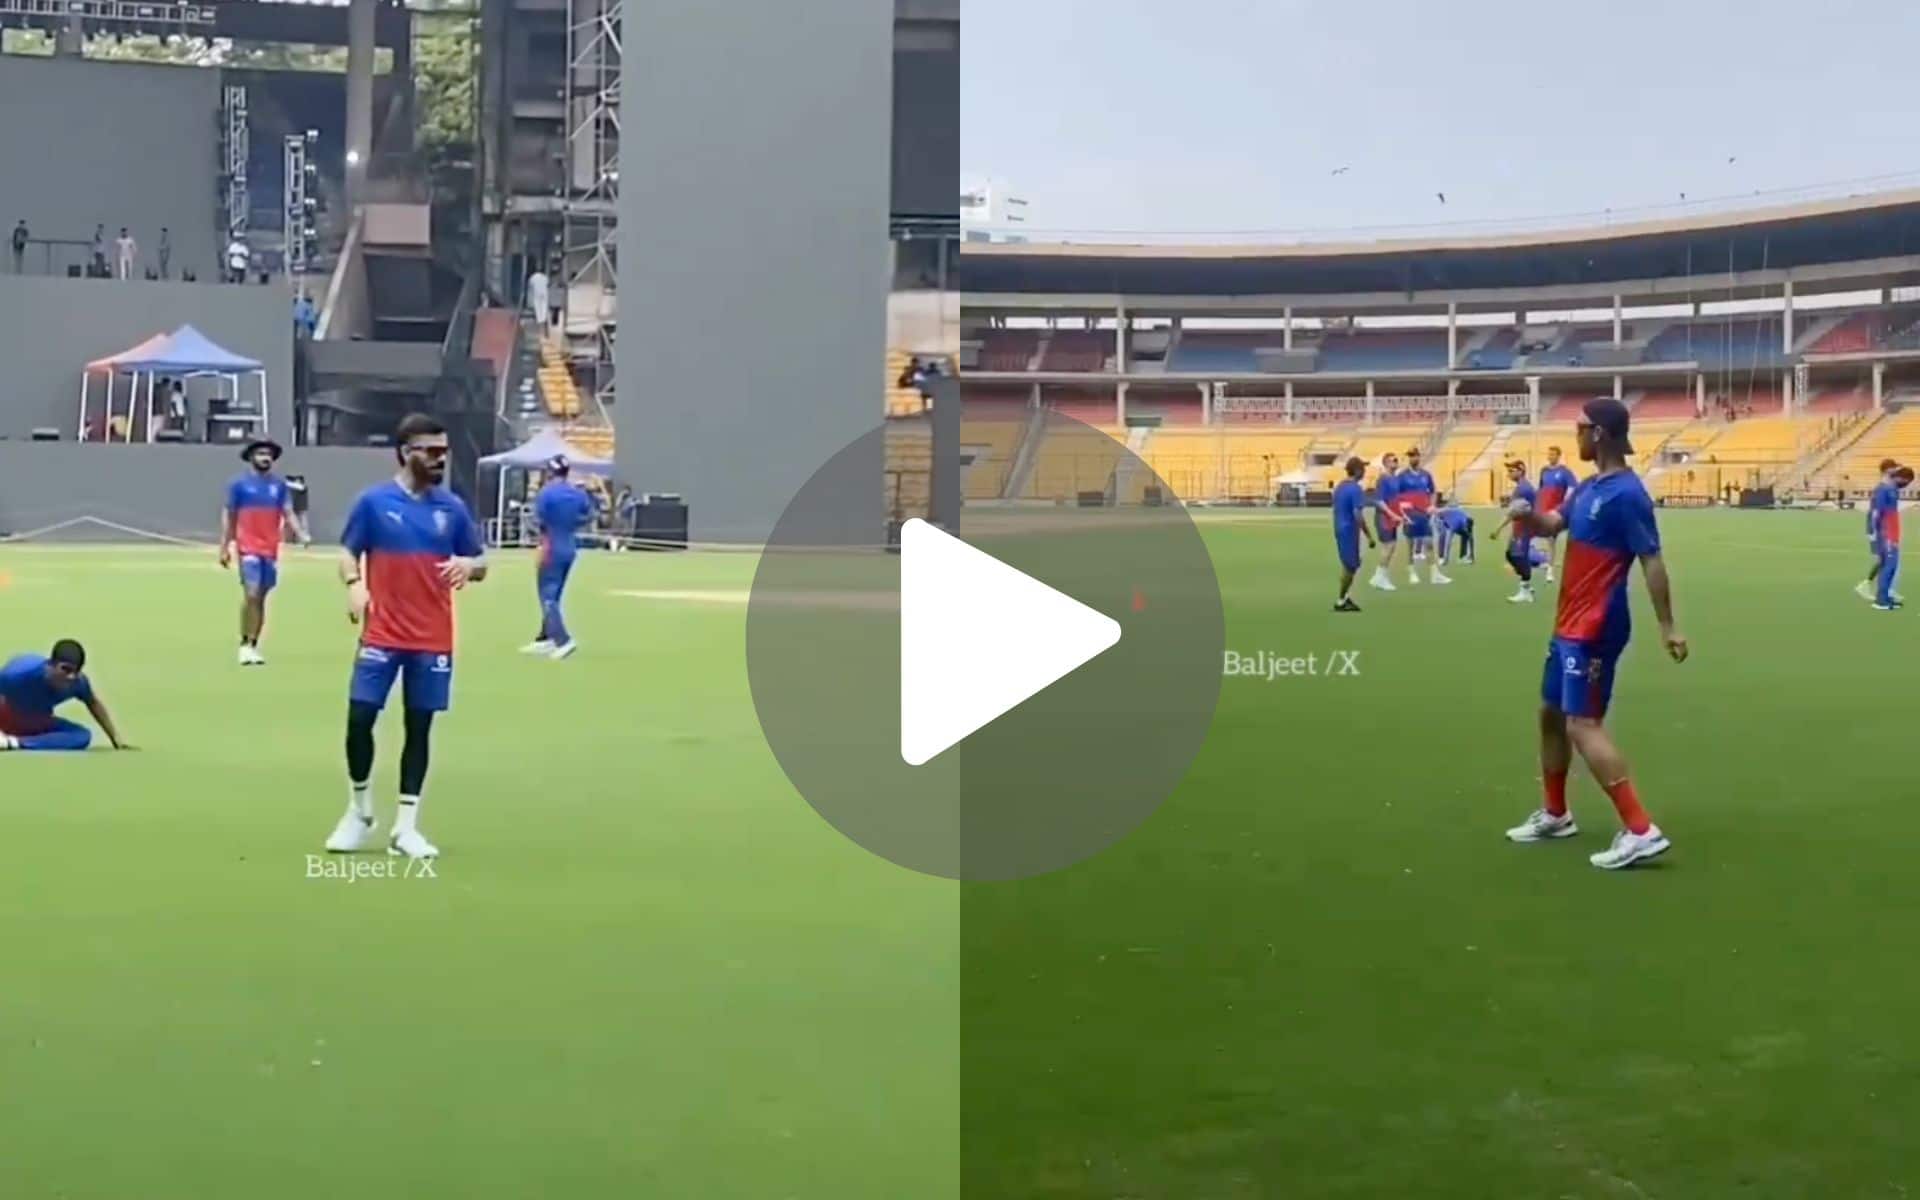 [Watch] Virat Kohli, Glenn Maxwell Display Football Skills Ahead Of RCB’s IPL Opener Vs CSK